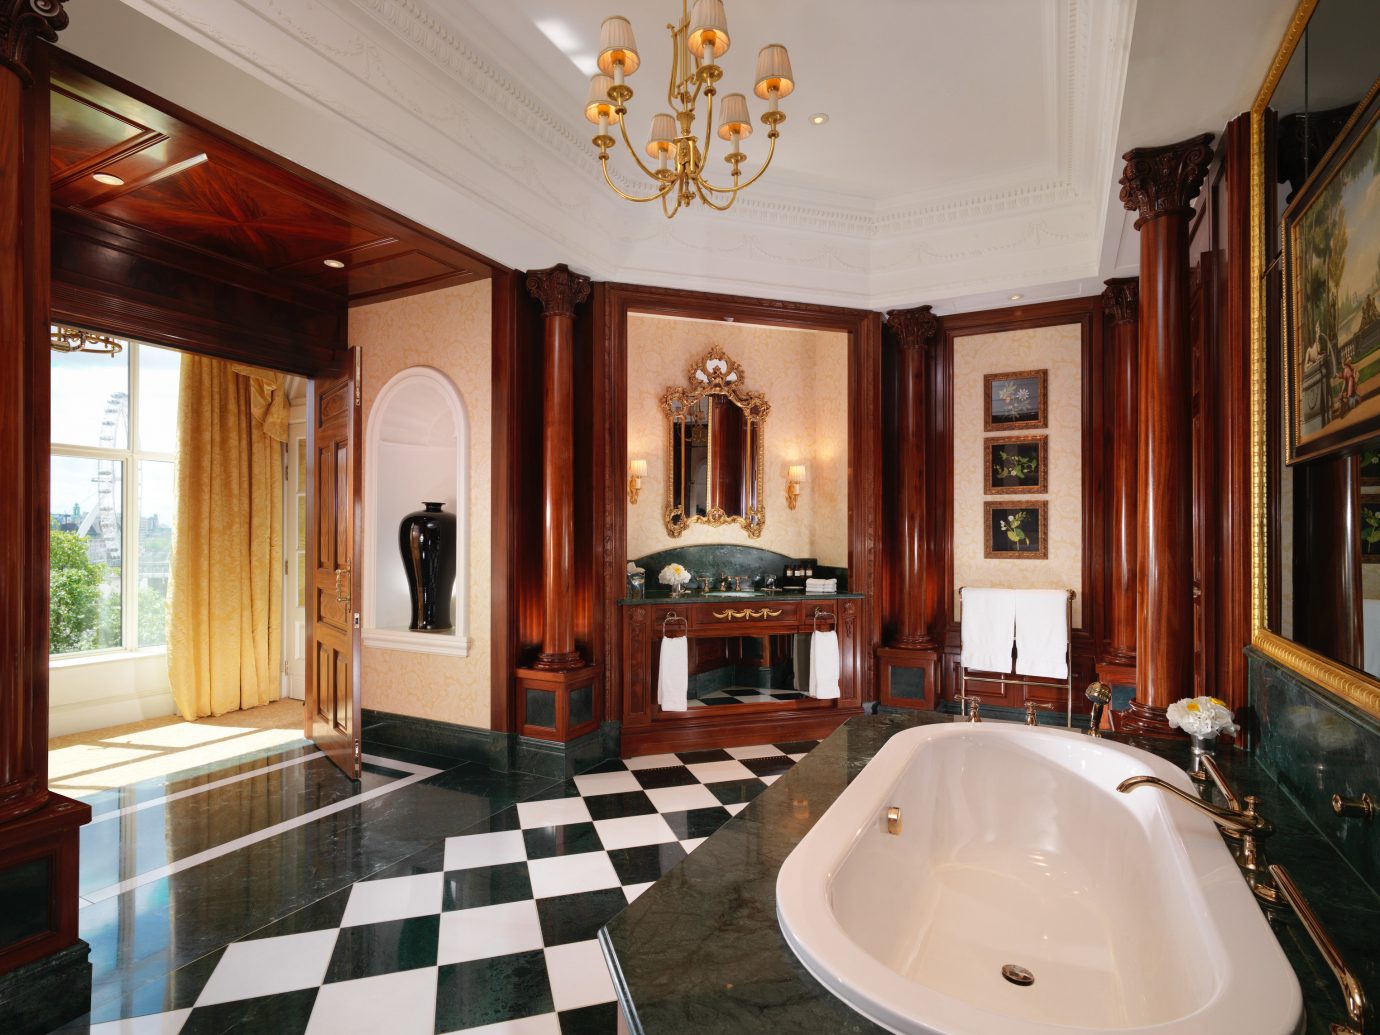 Hotels London Luxury Travel indoor bathroom window room property ceiling estate interior design sink real estate Suite flooring tub tile bathtub Bath tiled